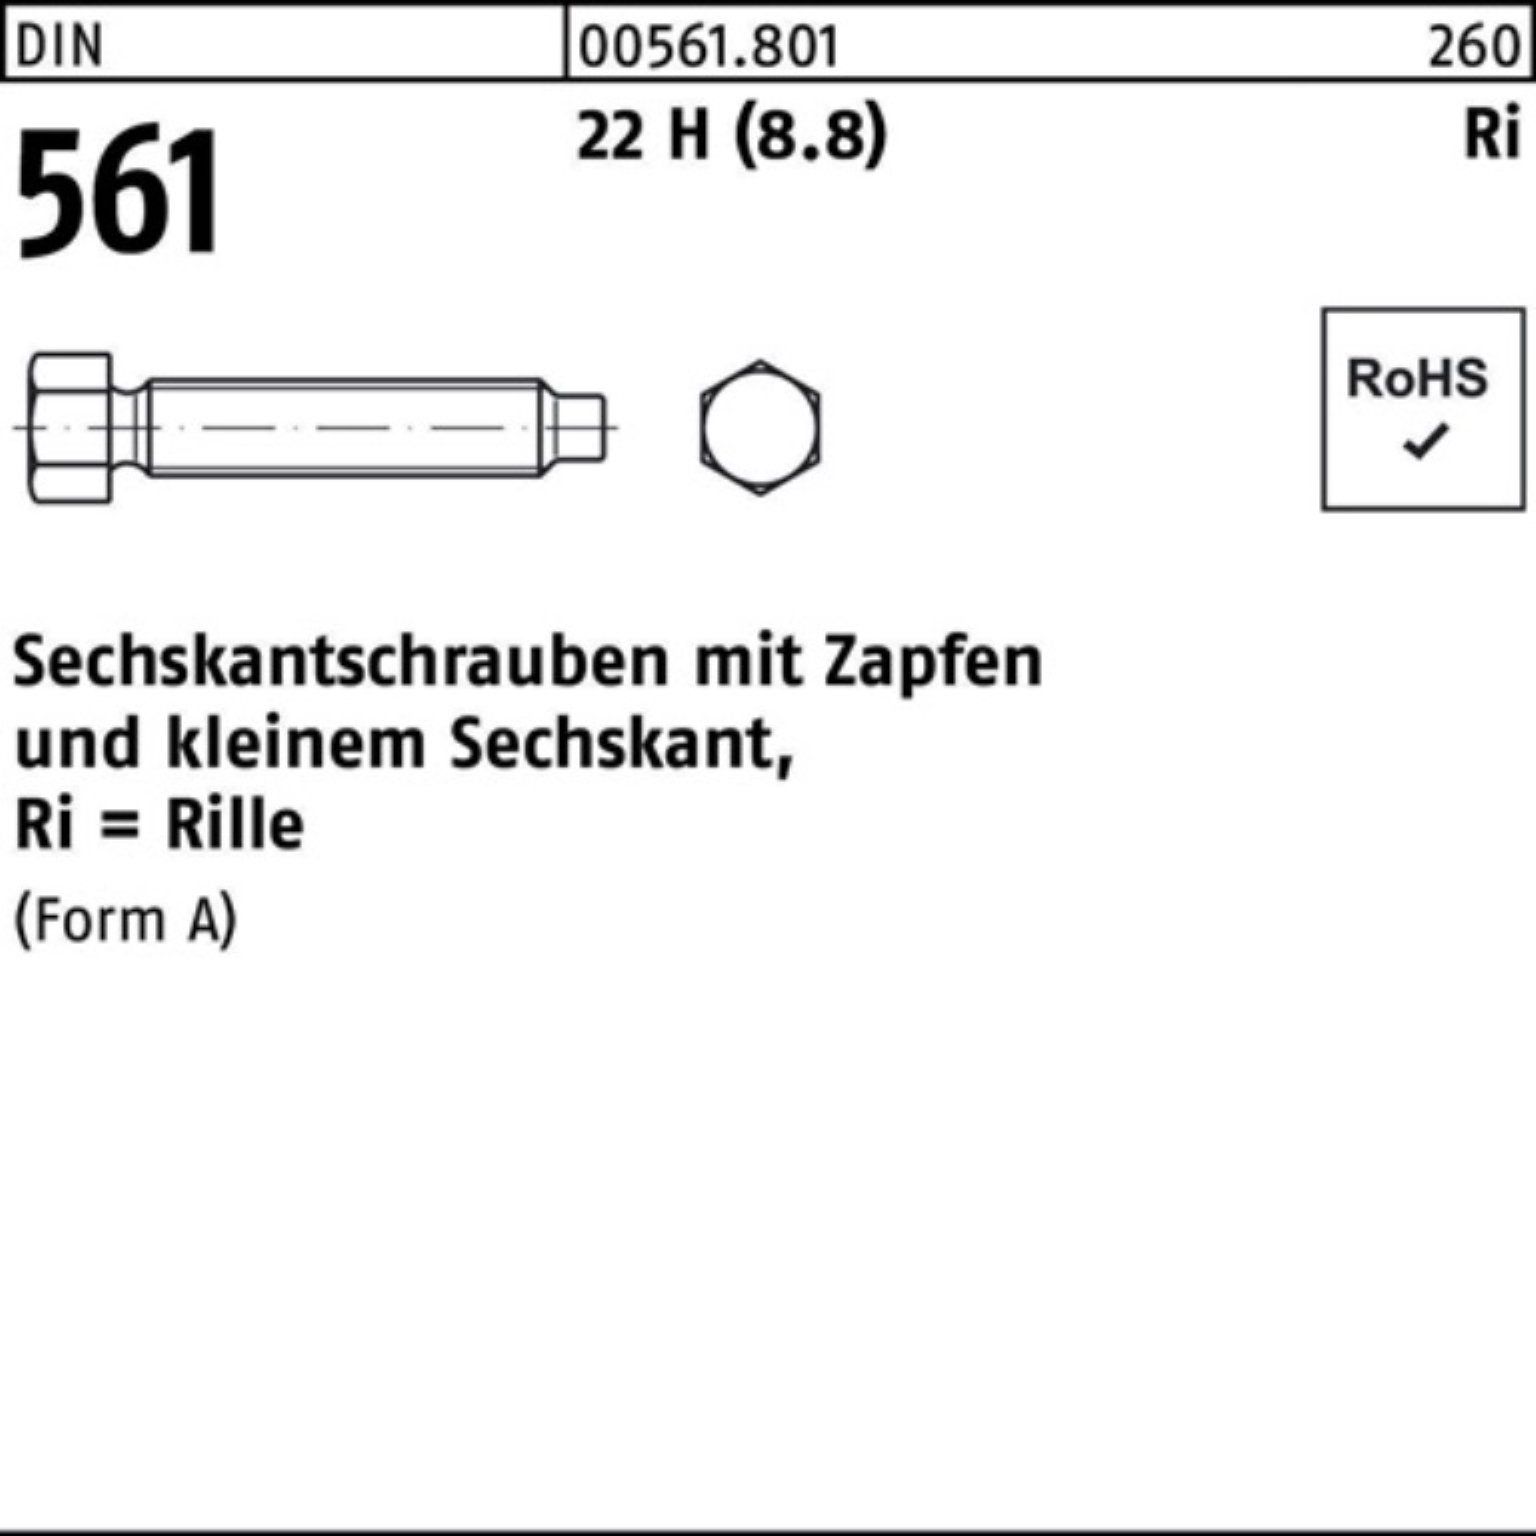 Reyher Sechskantschraube 100er Pack Sechskantschraube DIN 561 Zapfen AM 8x 20 22 H (8.8) 100 St